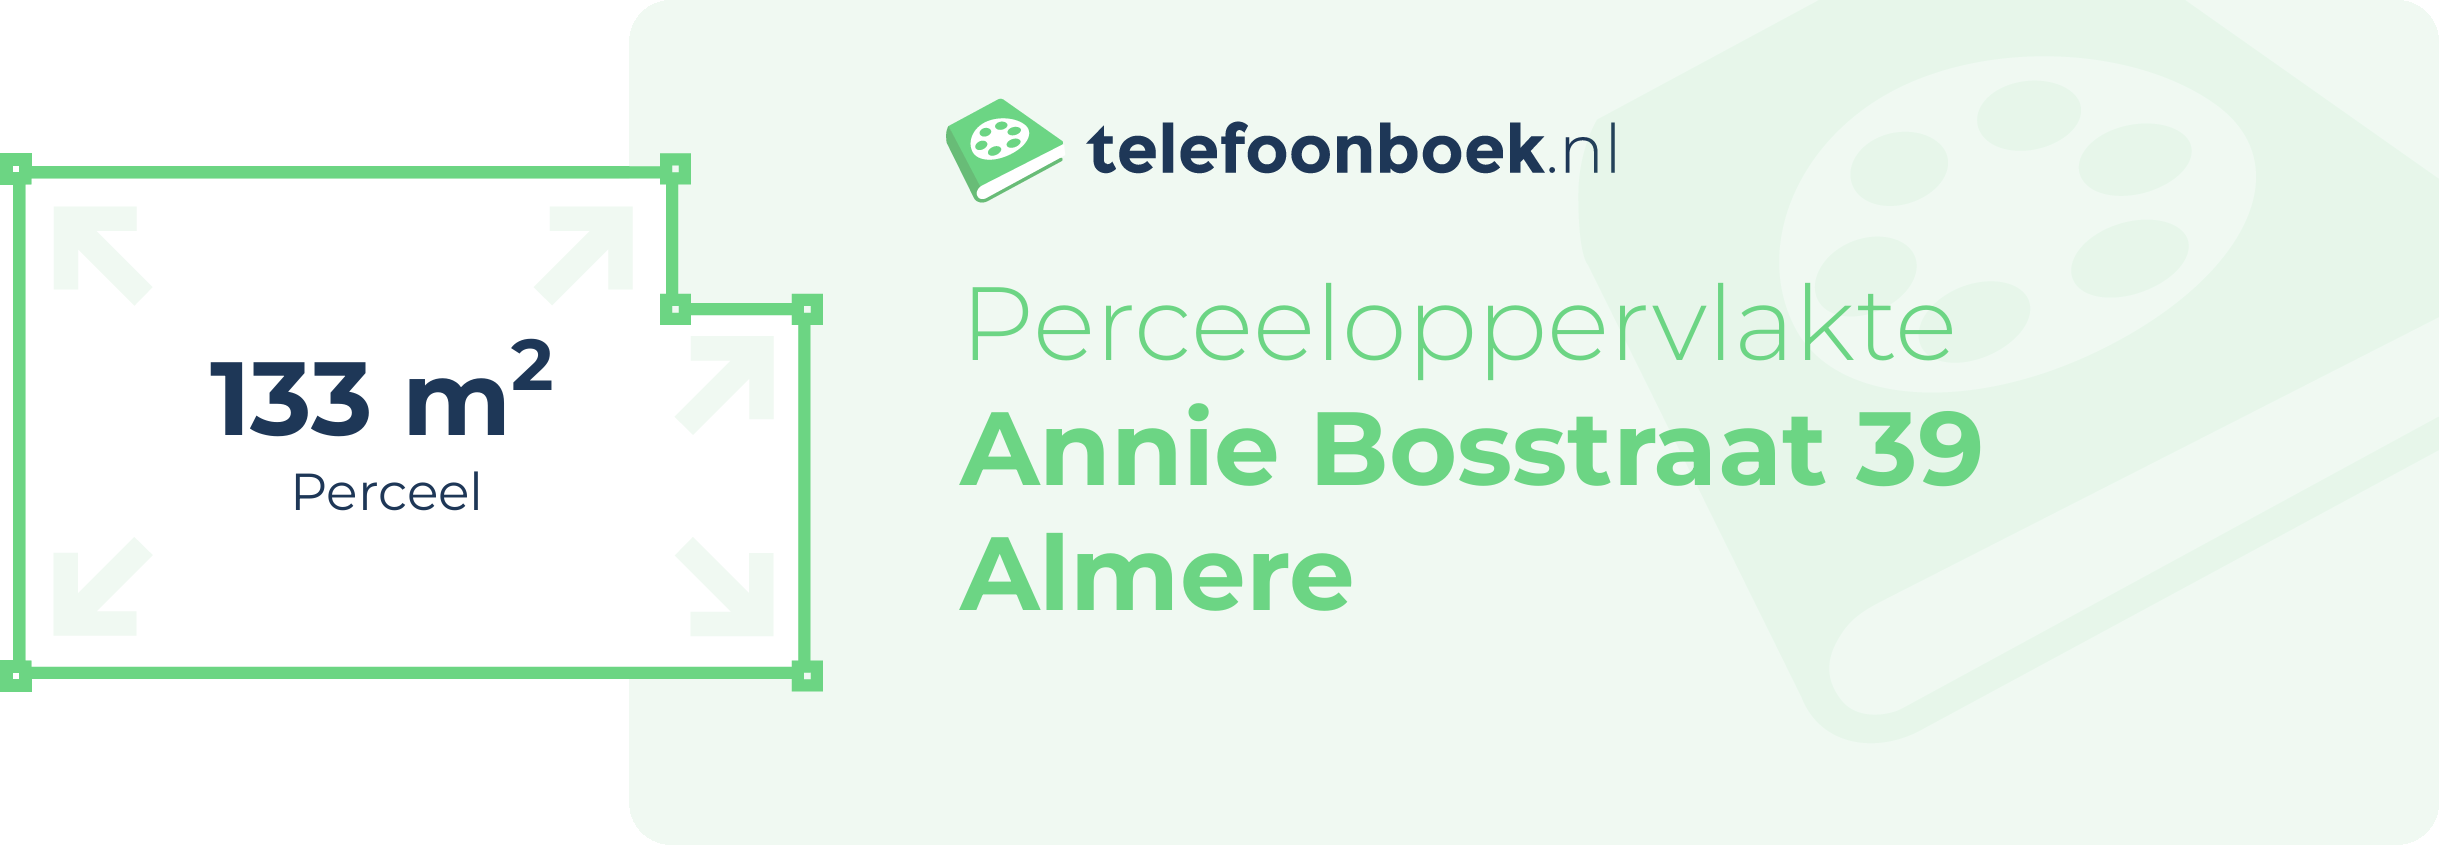 Perceeloppervlakte Annie Bosstraat 39 Almere